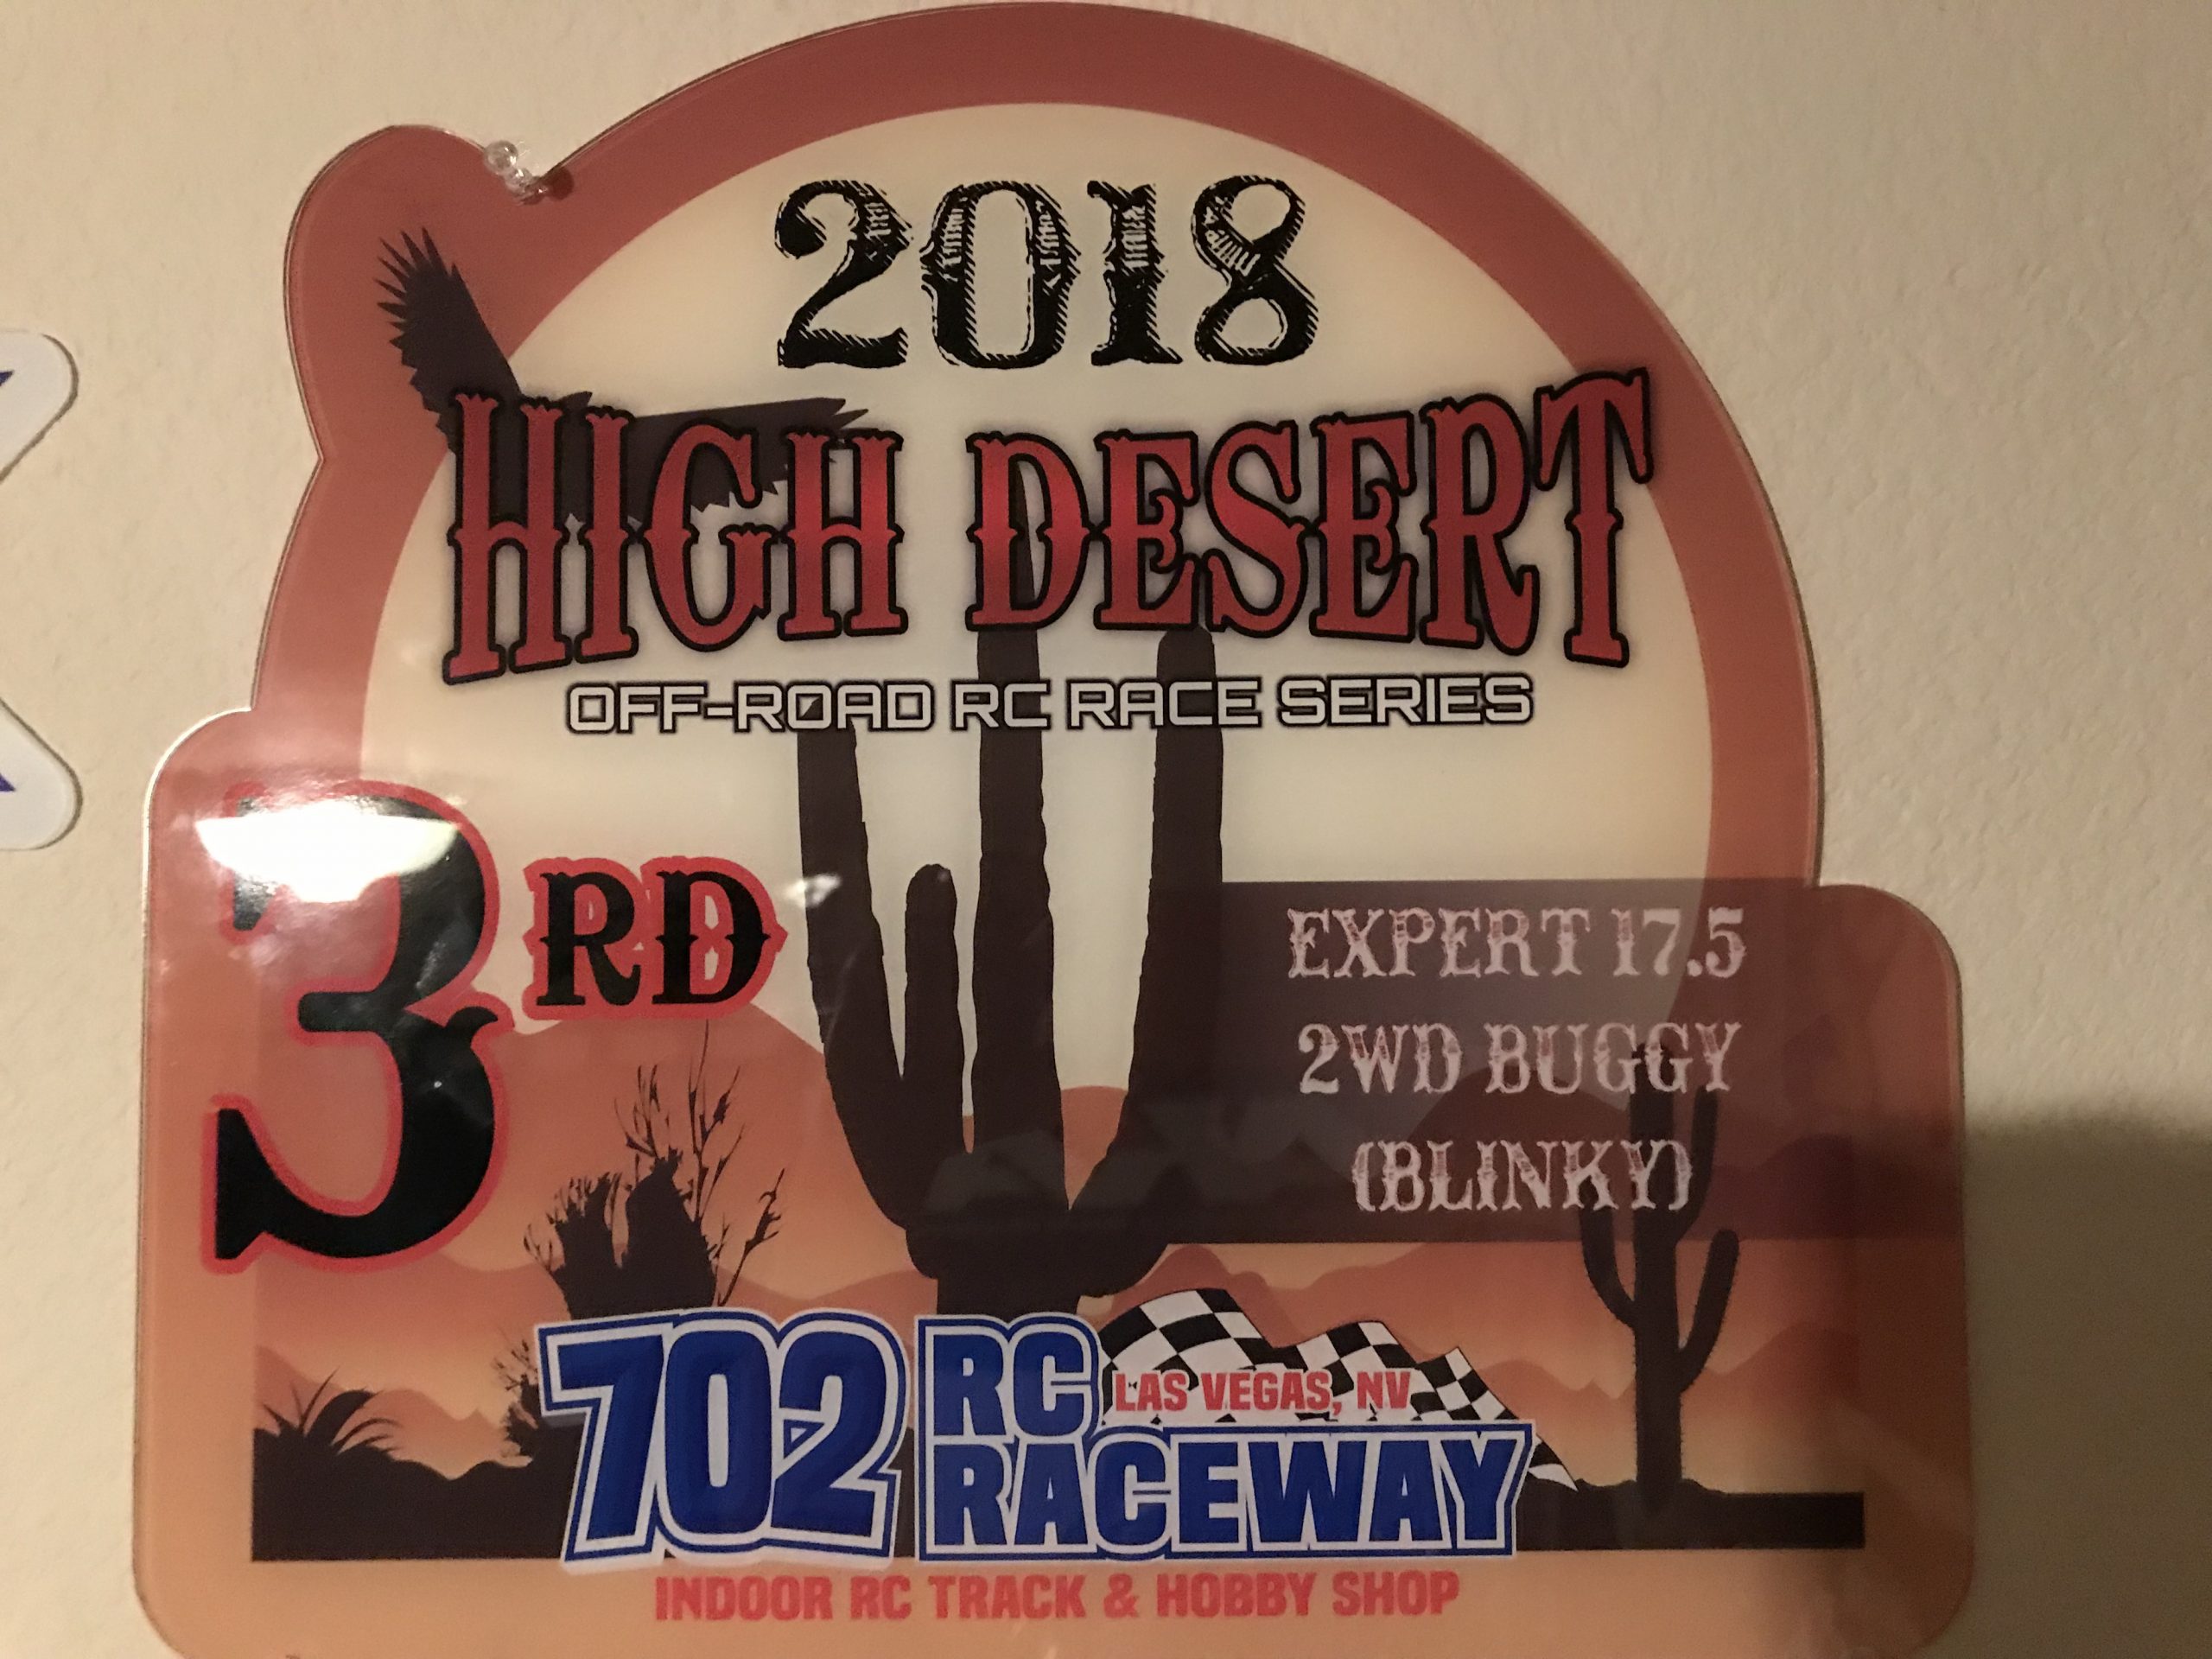 2018 High Desert Off-Road RC Race Series